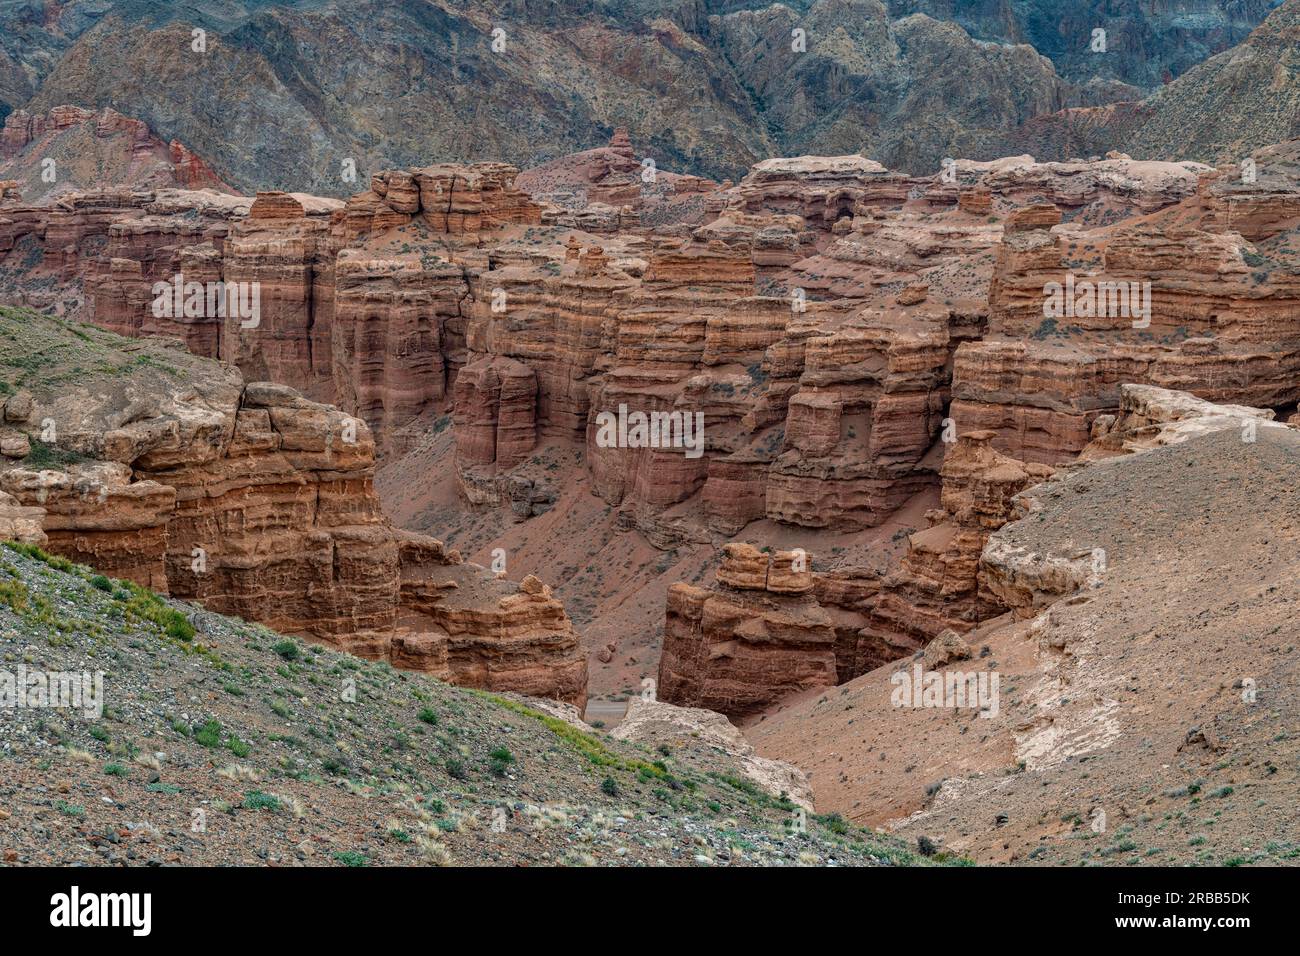 Canyon di arenaria di Charyn, montagne di Tian shan, Kazakistan Foto Stock